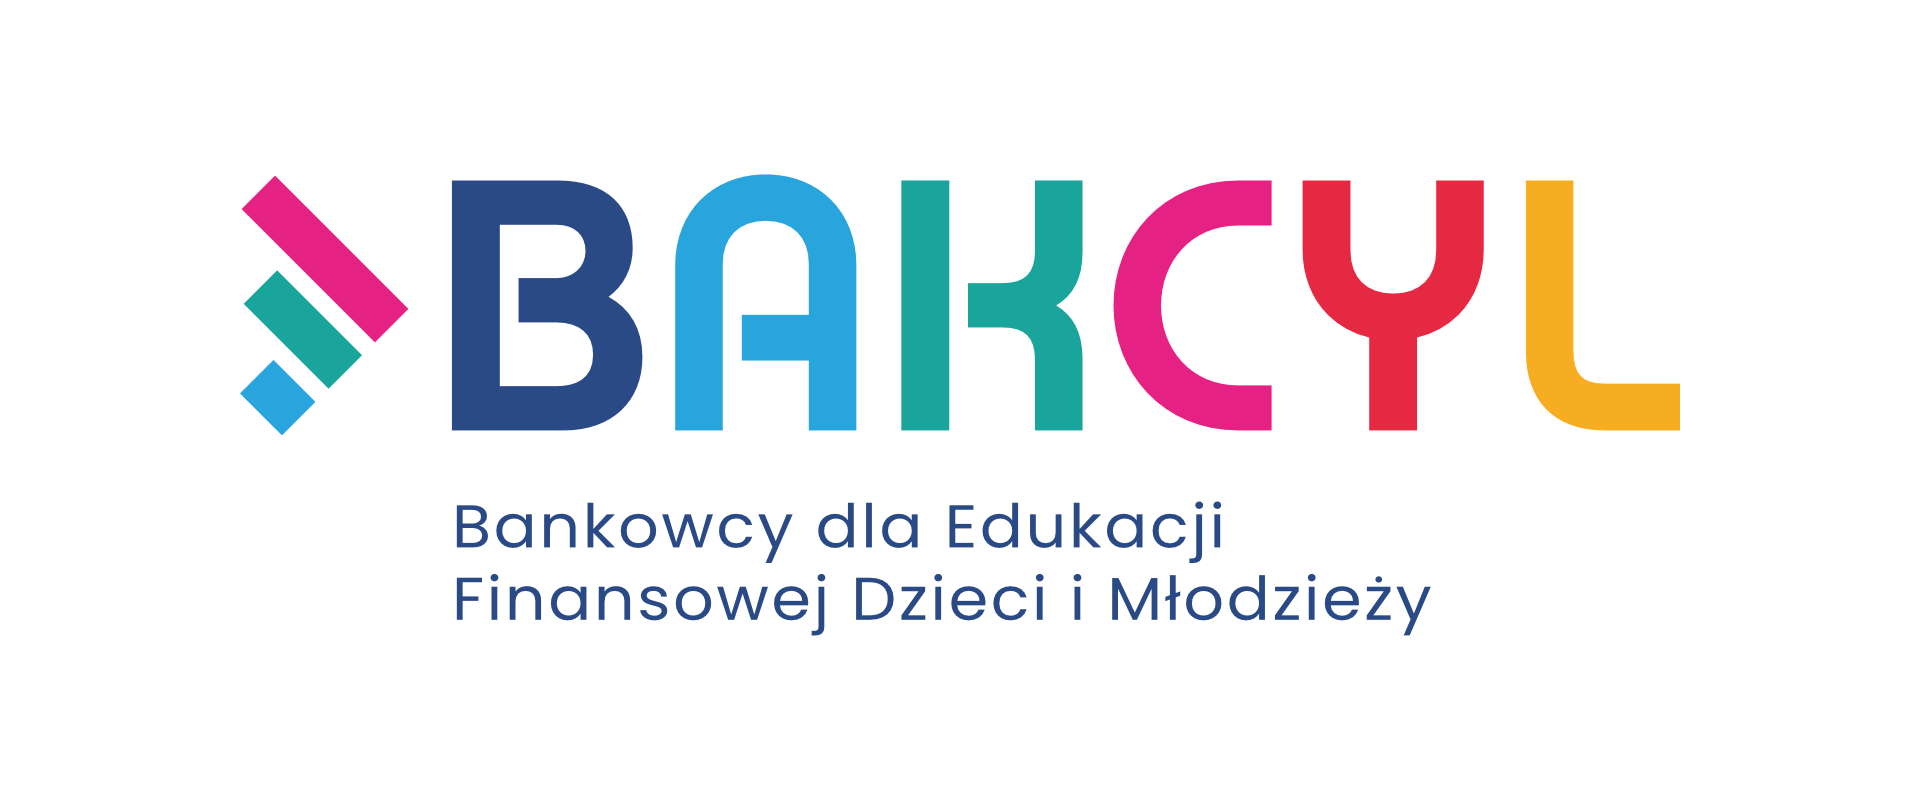 BAKCYL - Logo